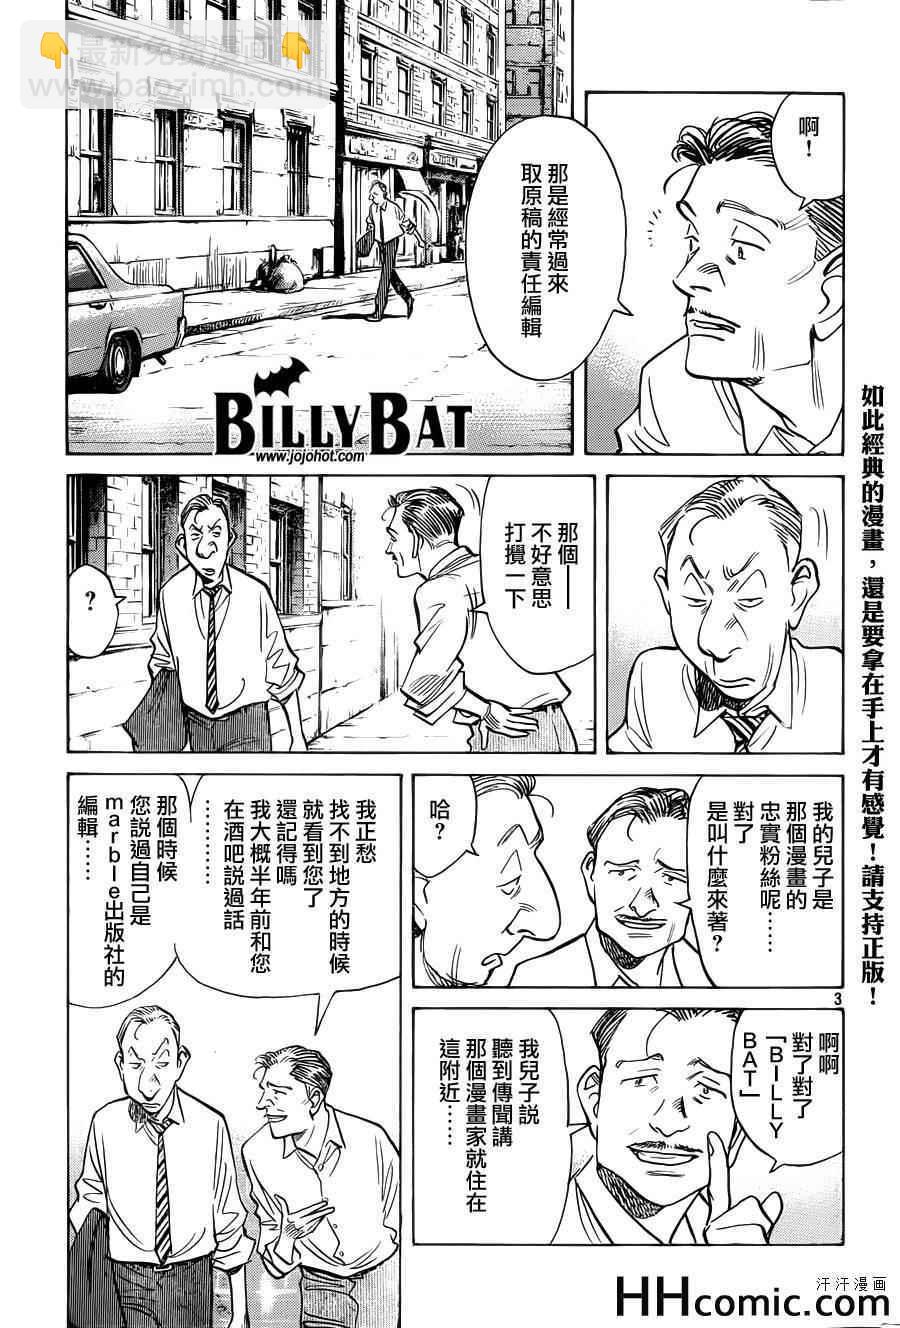 Billy_Bat - 第111话 - 3